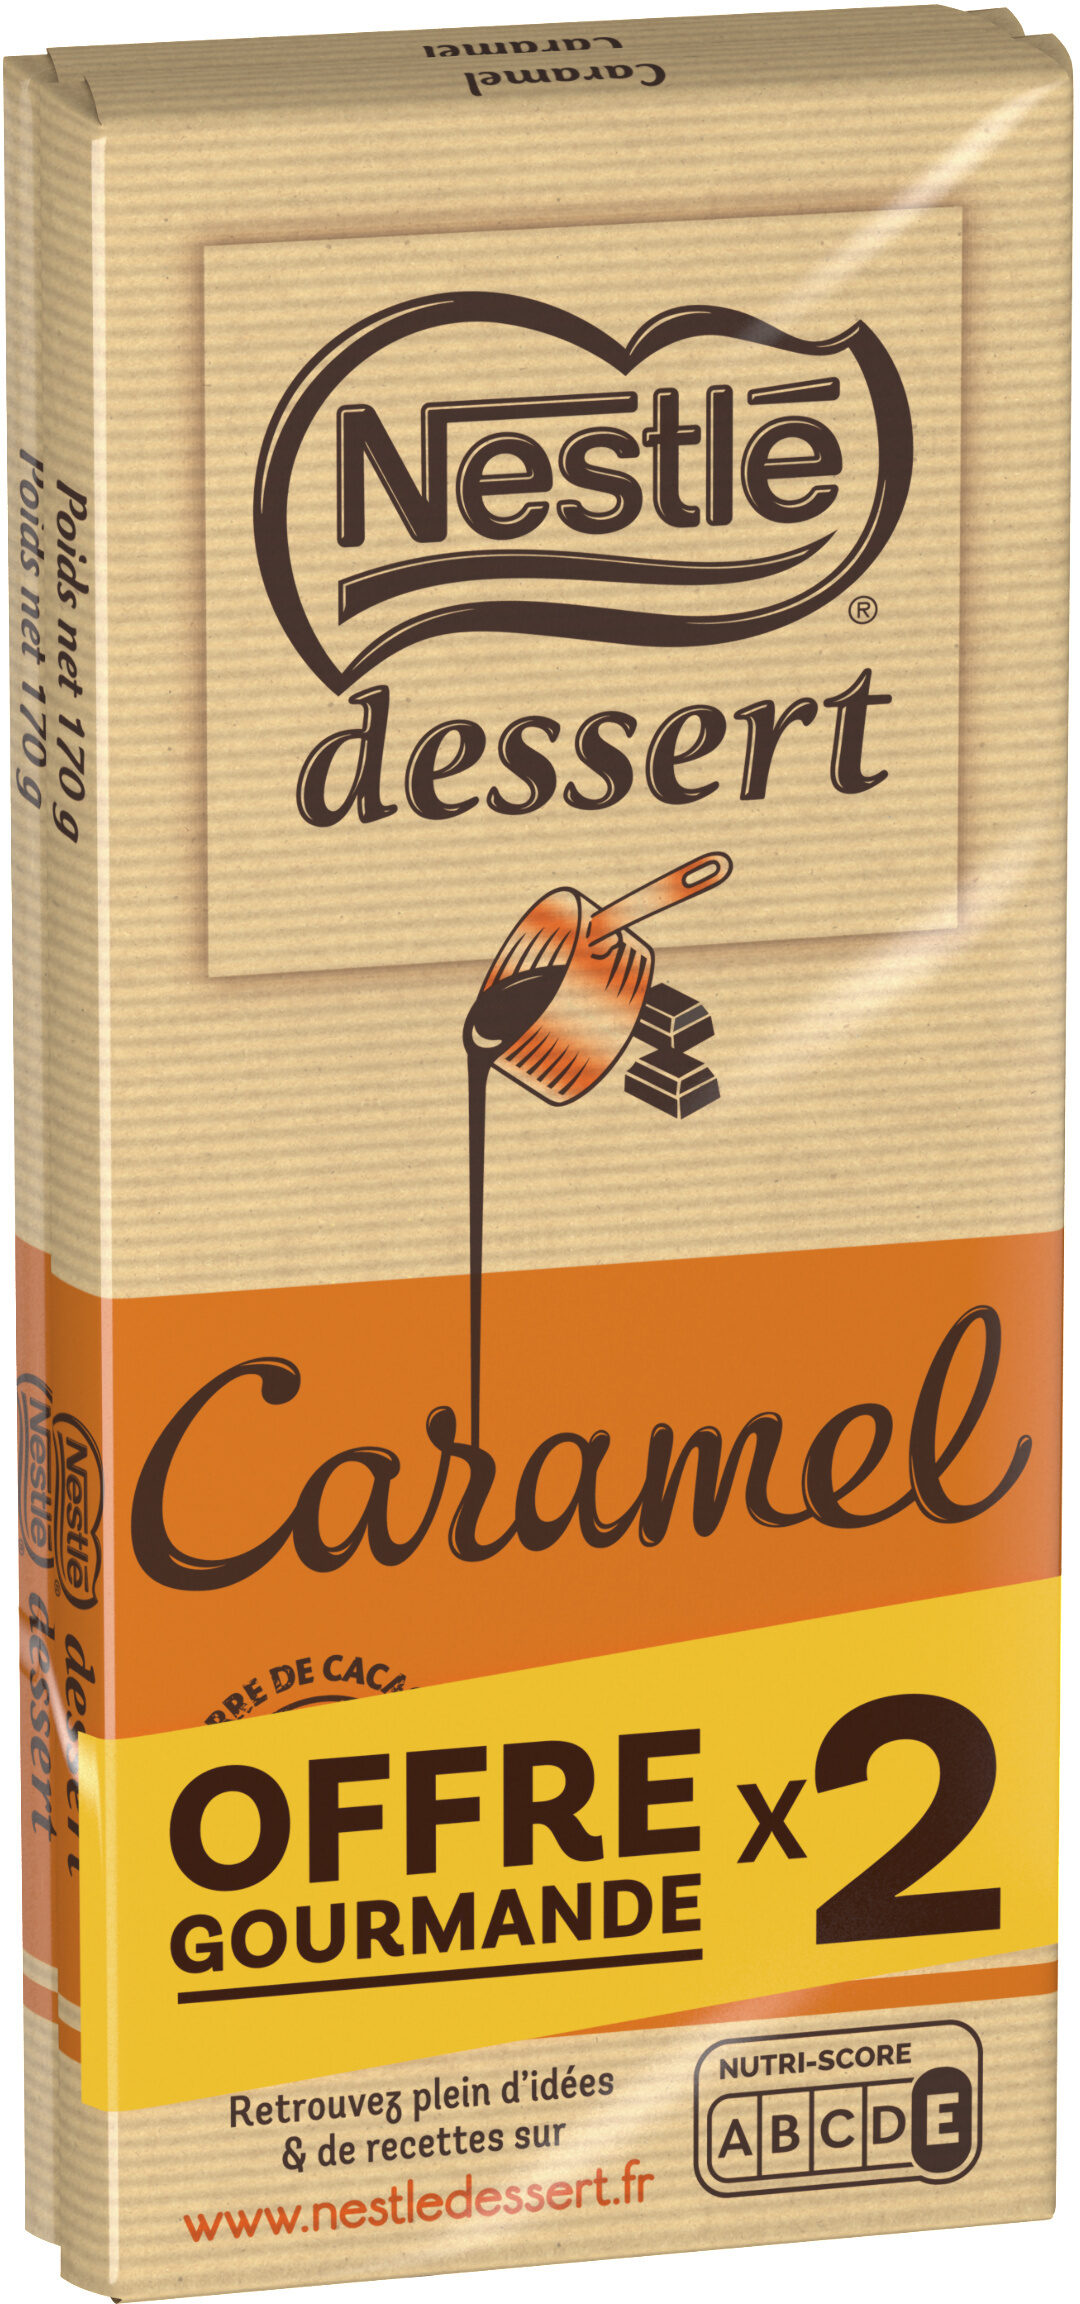 NESTLE DESSERT Caramel 2x 170 g - Product - fr